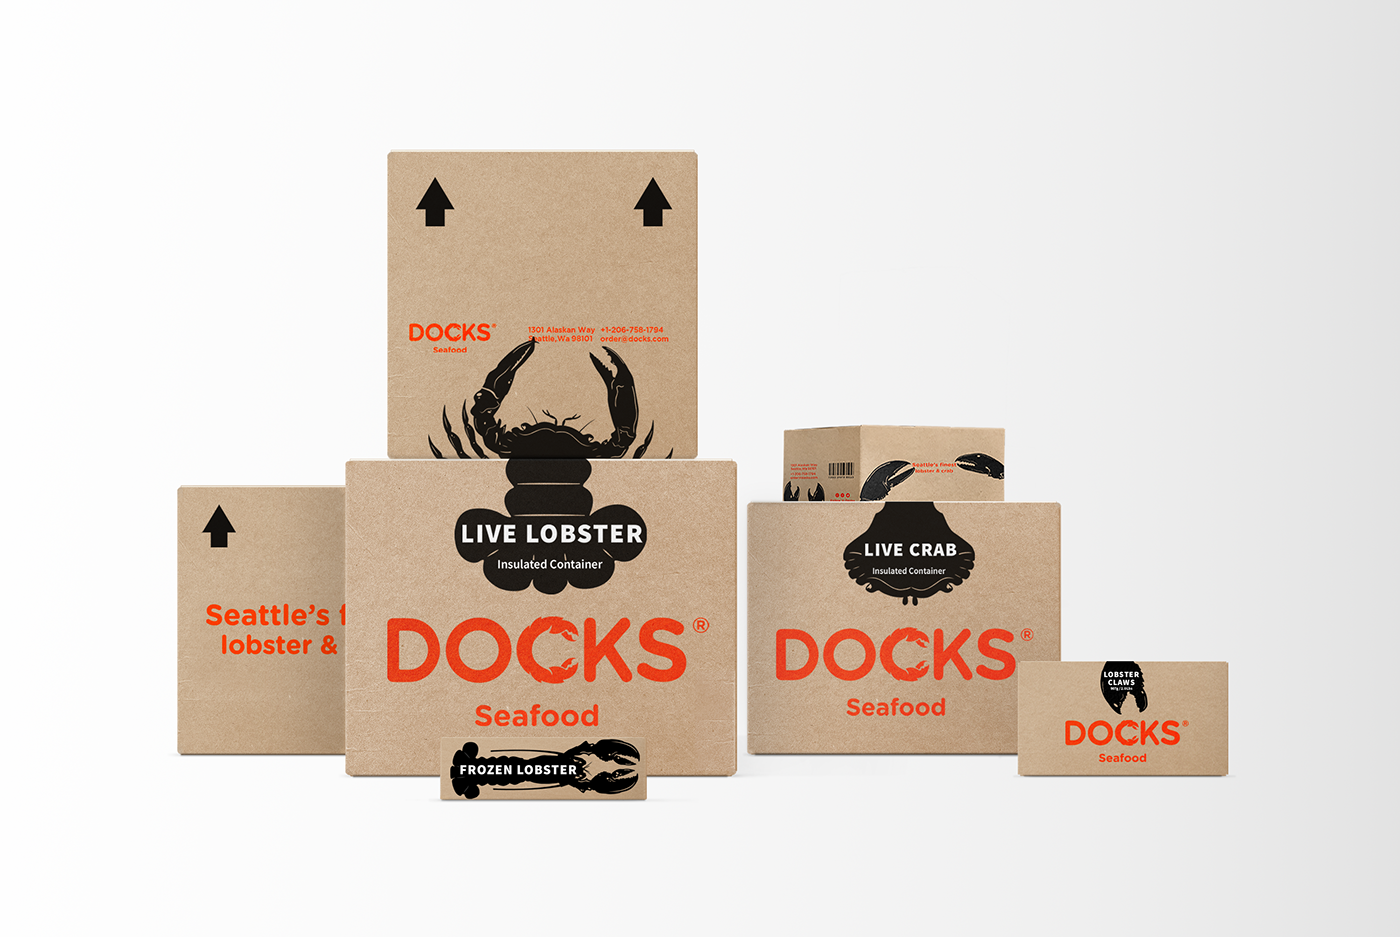 Логотип, Дизайн упаковки, веб-сайт, Брендинг, Docks Seafood, D87